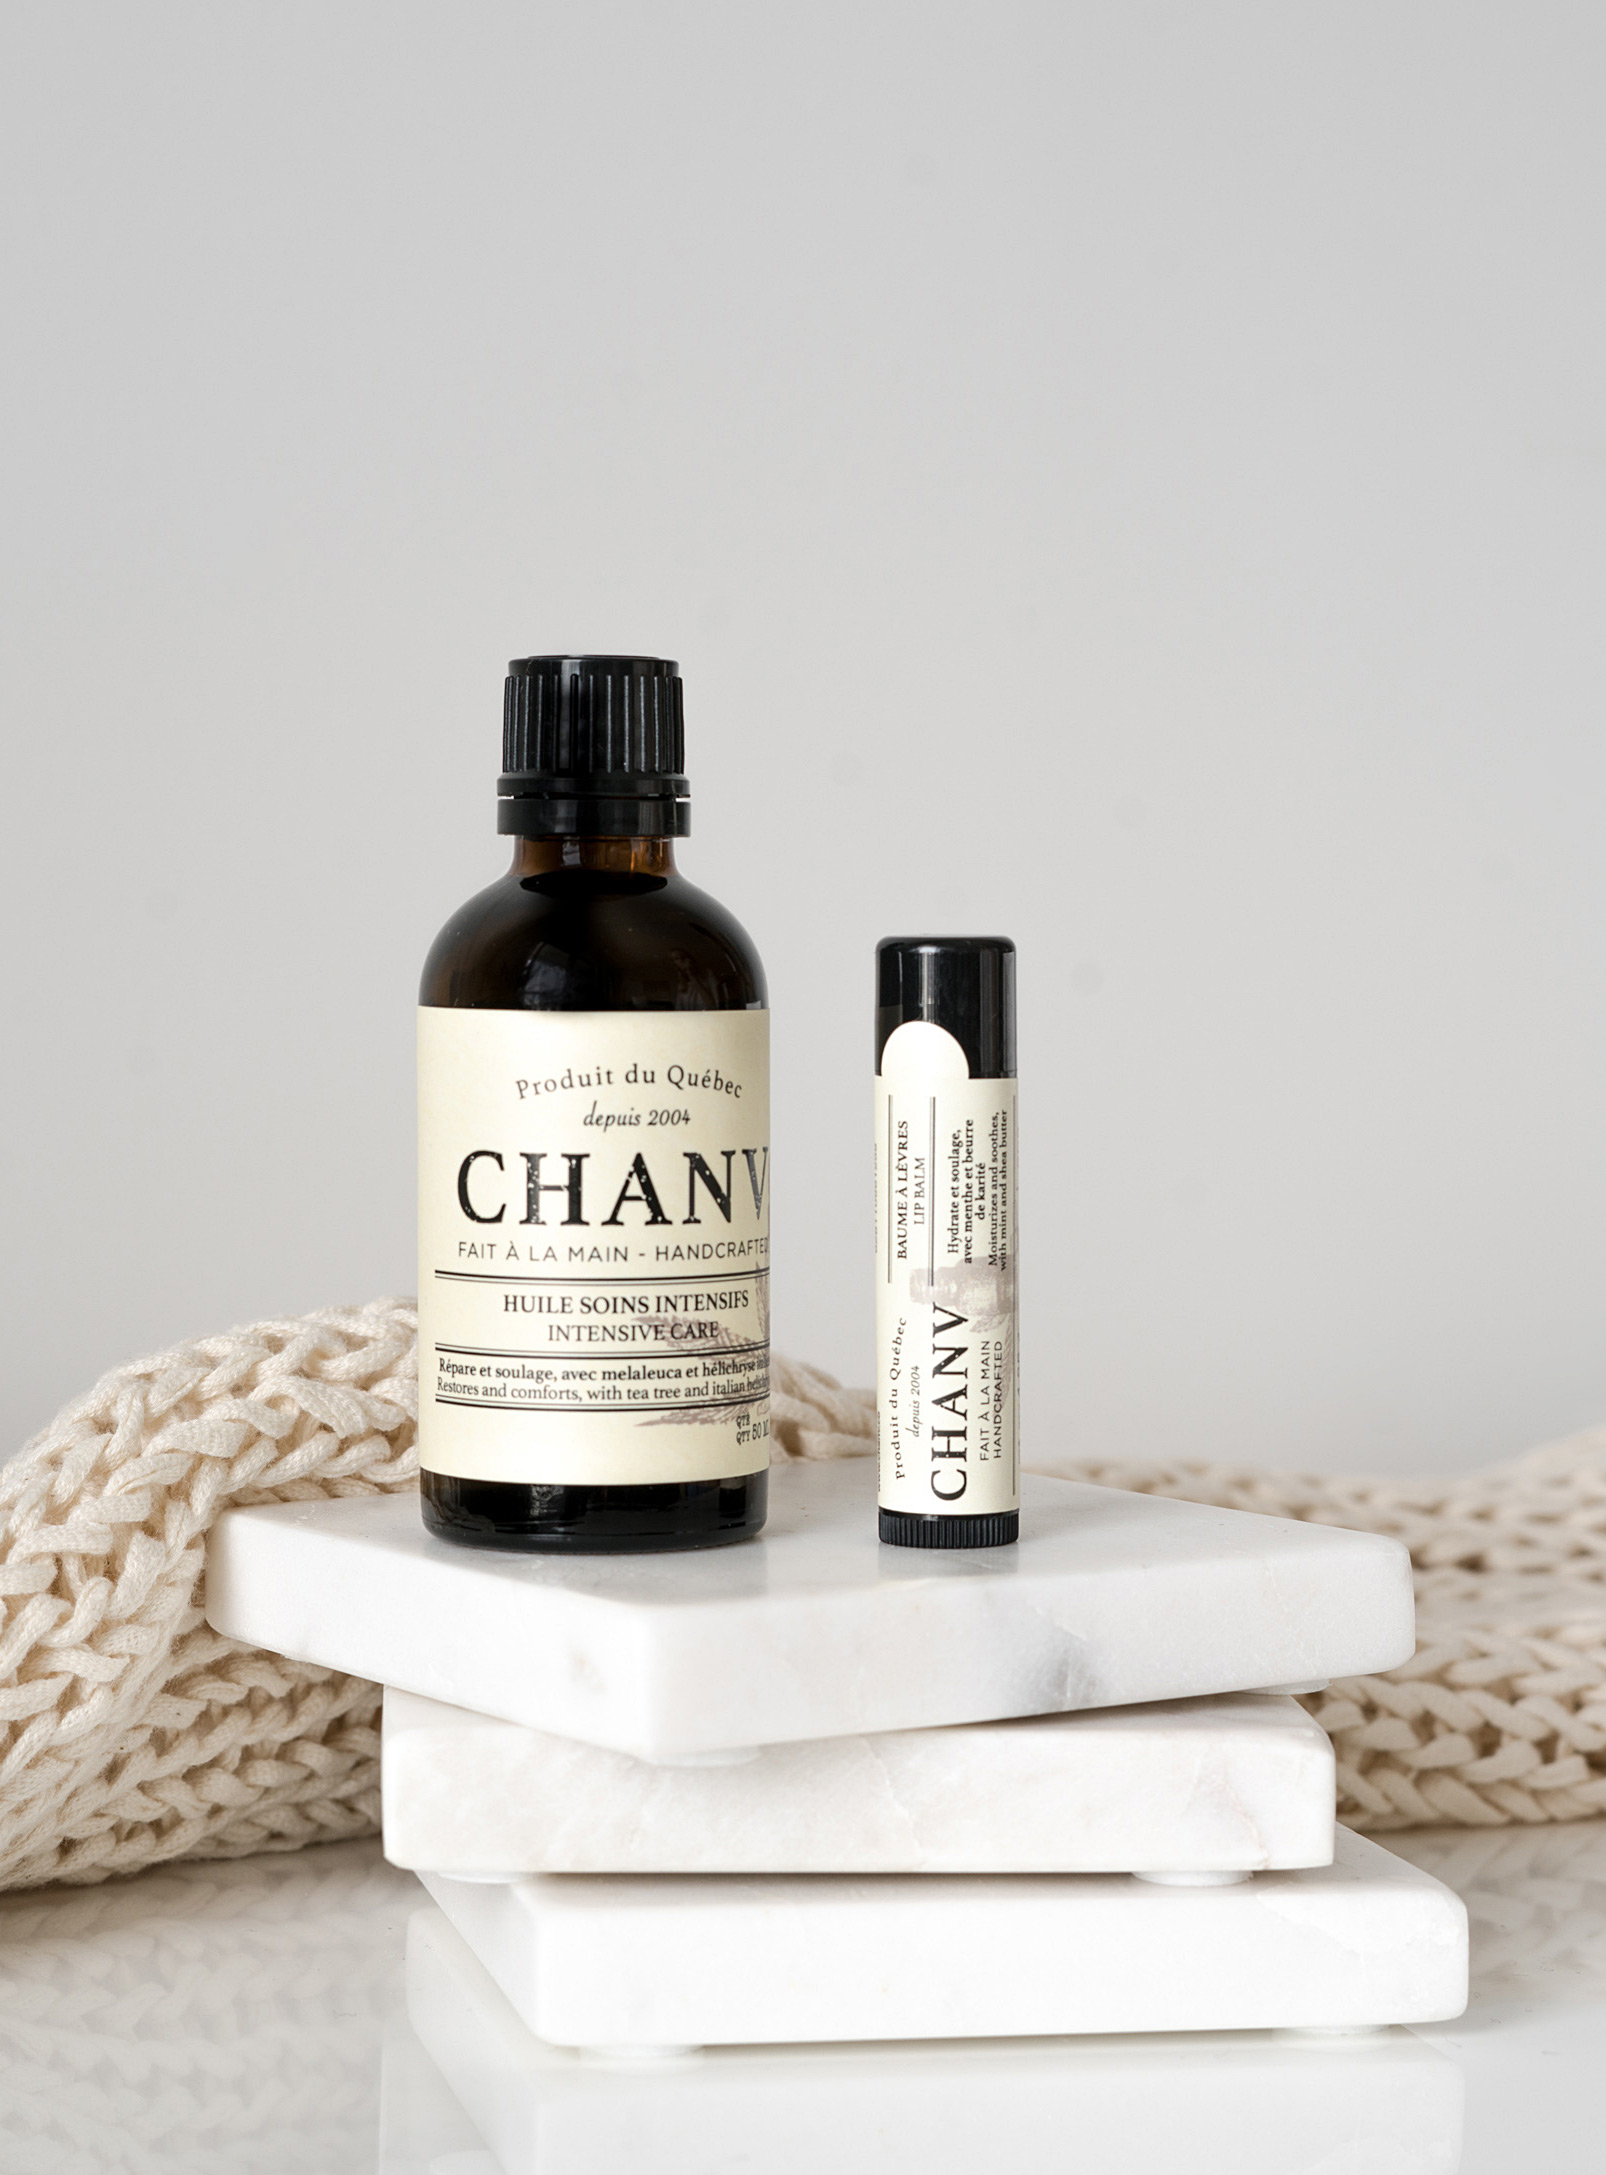 Chanv - Intensive care oil and lip balm set